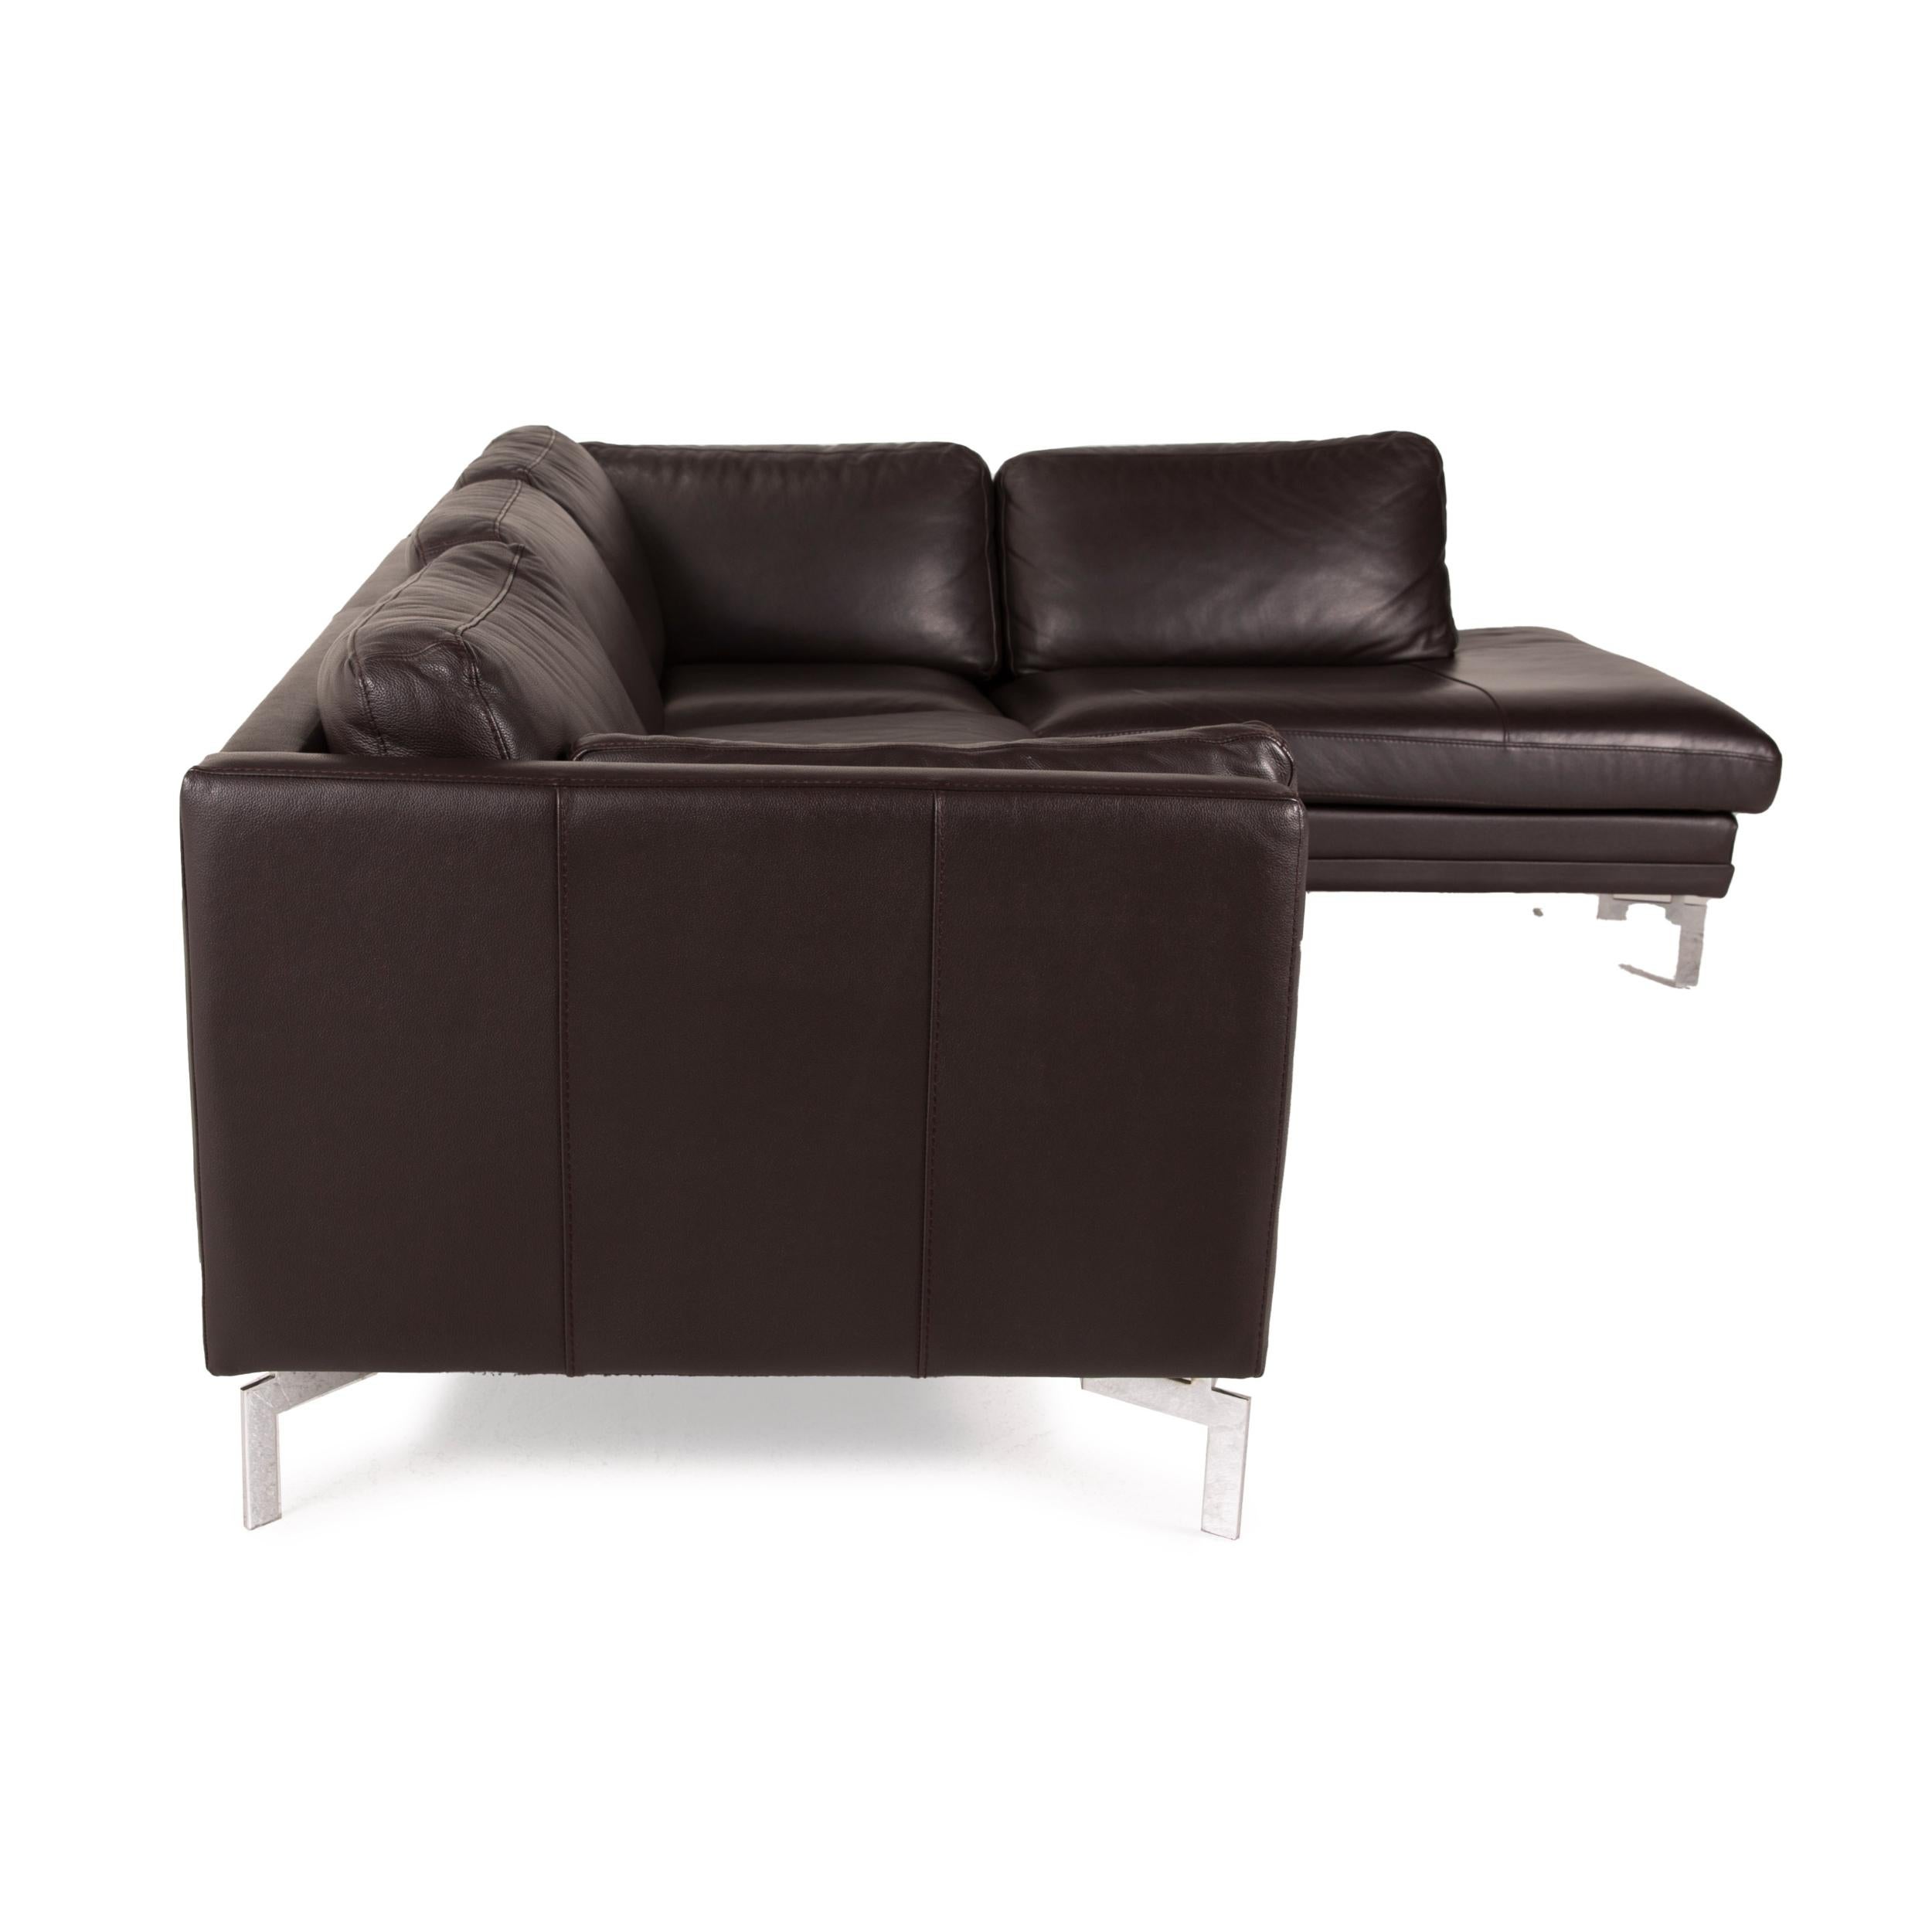 Polish Furninova leather sofa dark brown corner sofa couch For Sale